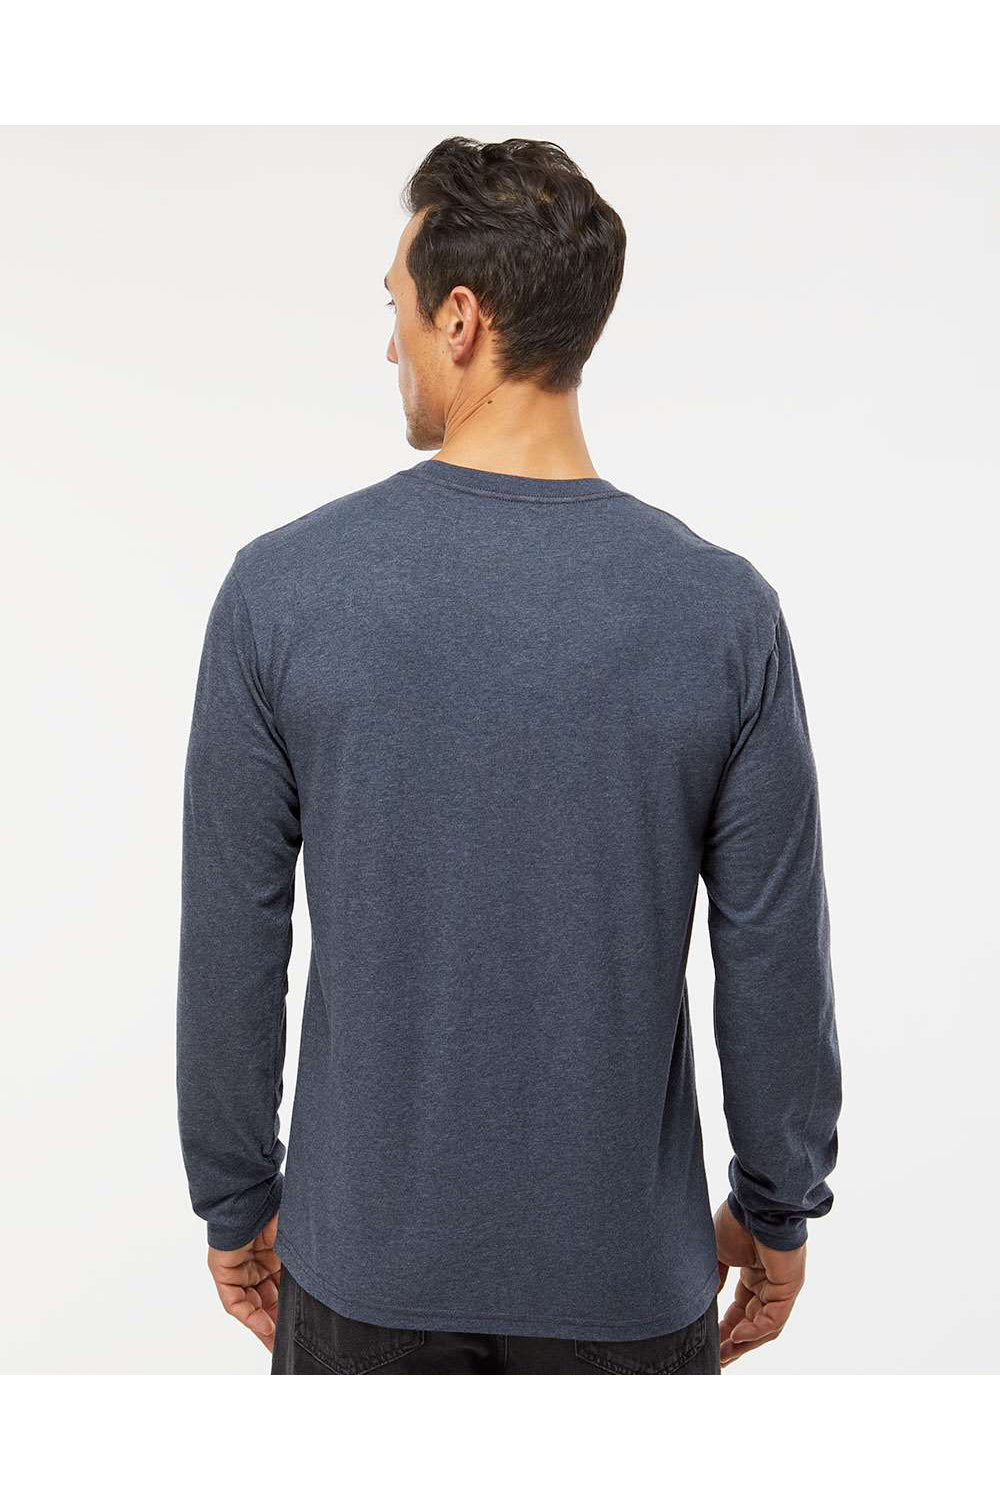 Kastlfel 2016 Mens RecycledSoft Long Sleeve Crewneck T-Shirt Midnight Blue Model Back